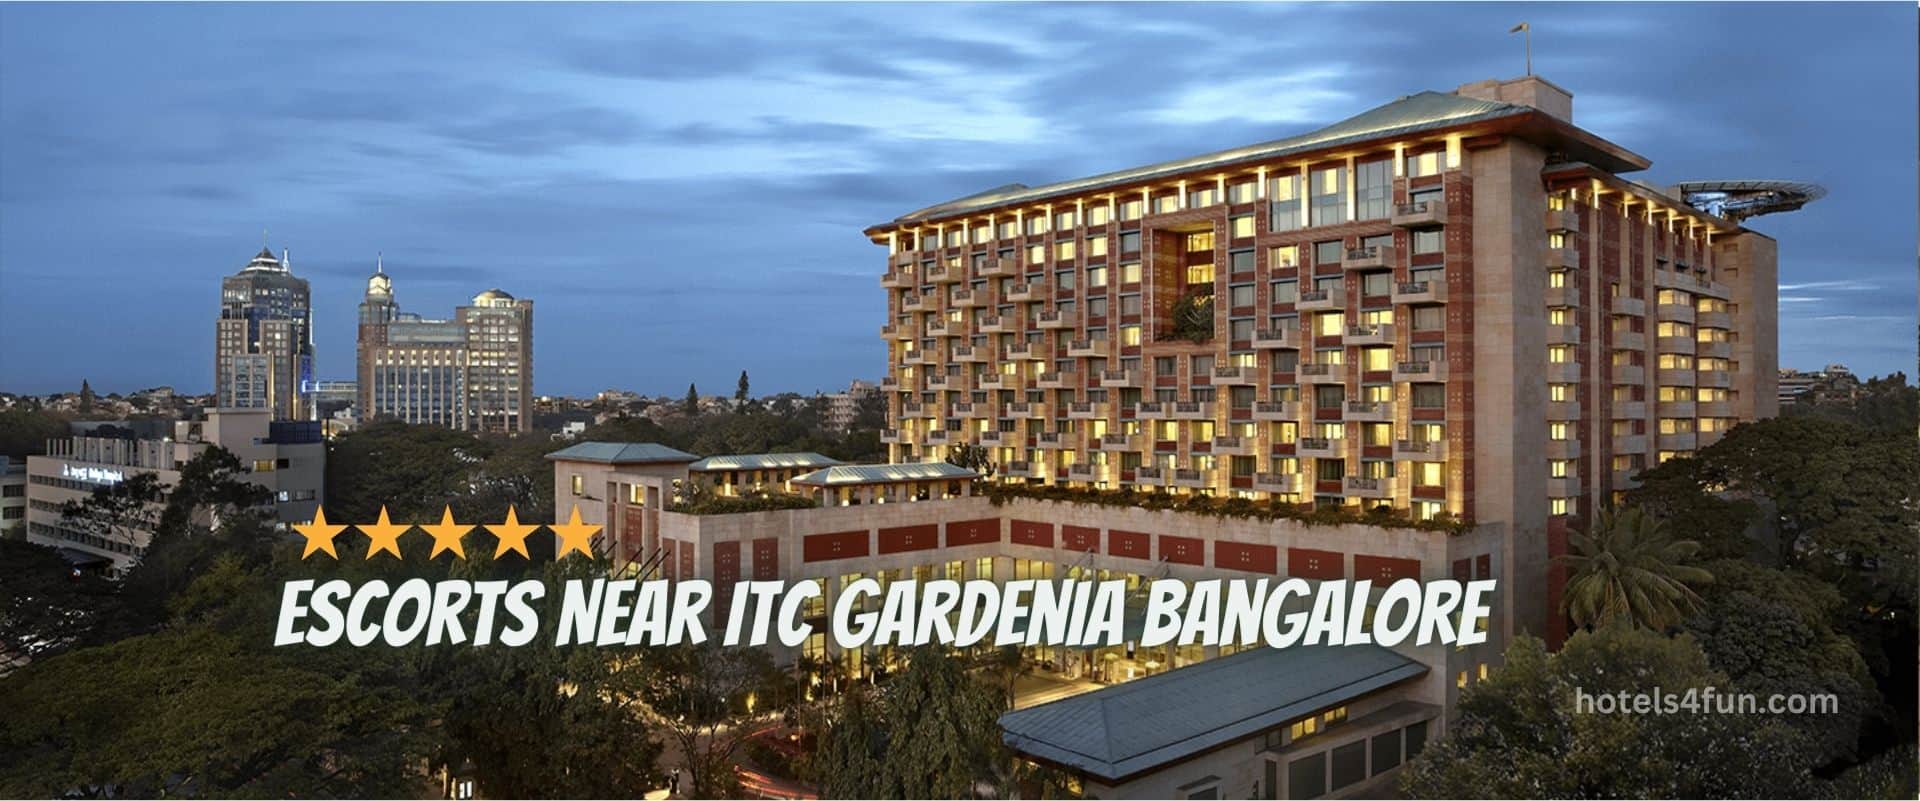 escorts-near-itc-gardenia-bangalore Hotel Escorts